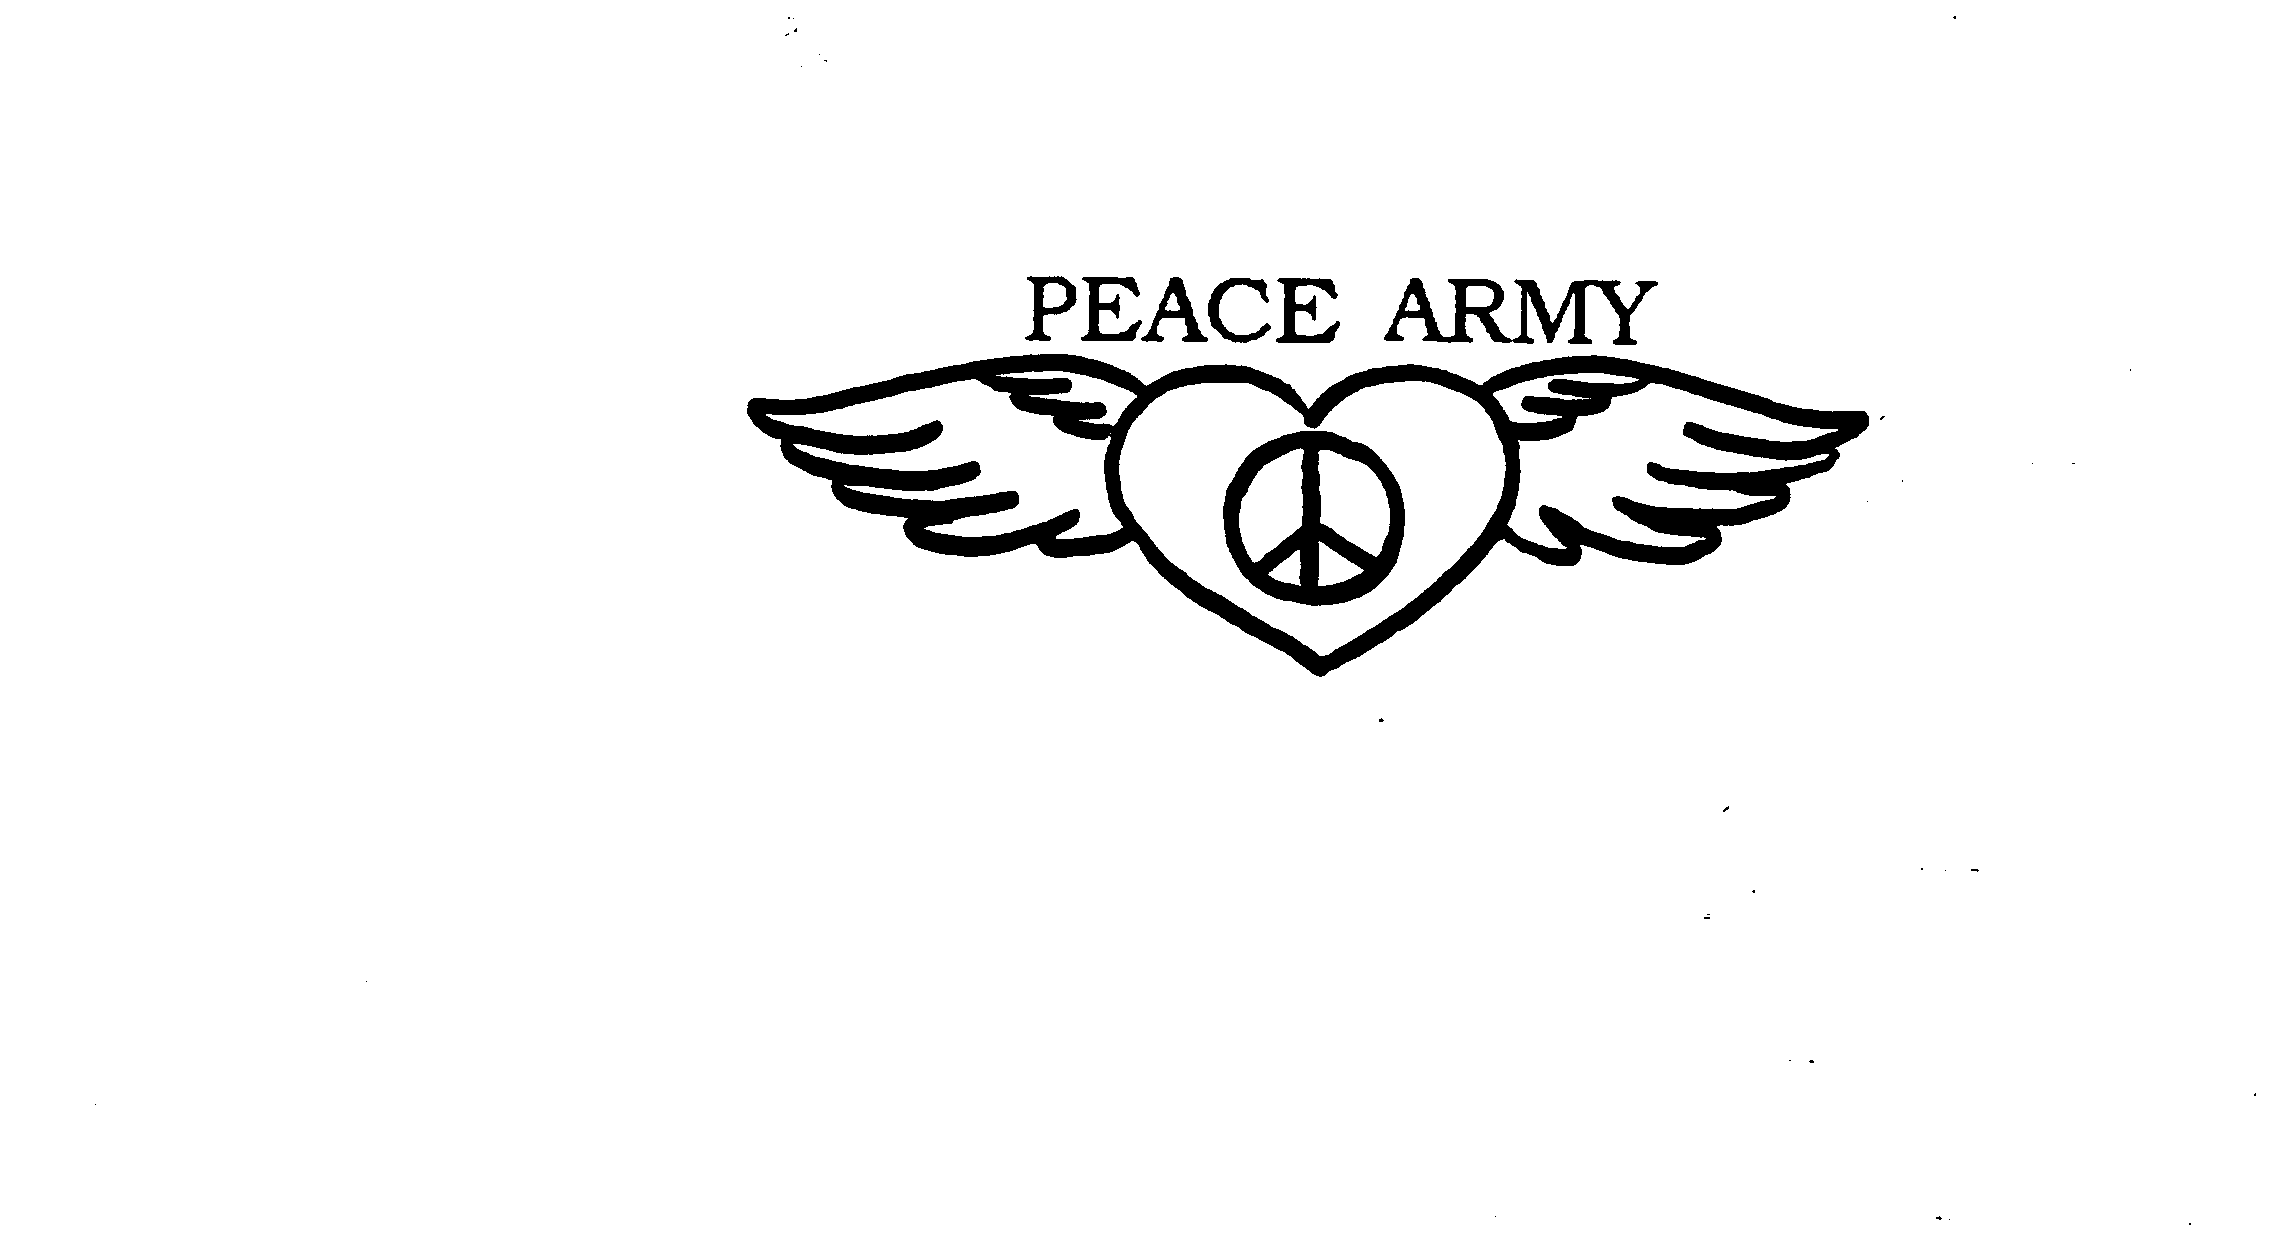 PEACE ARMY